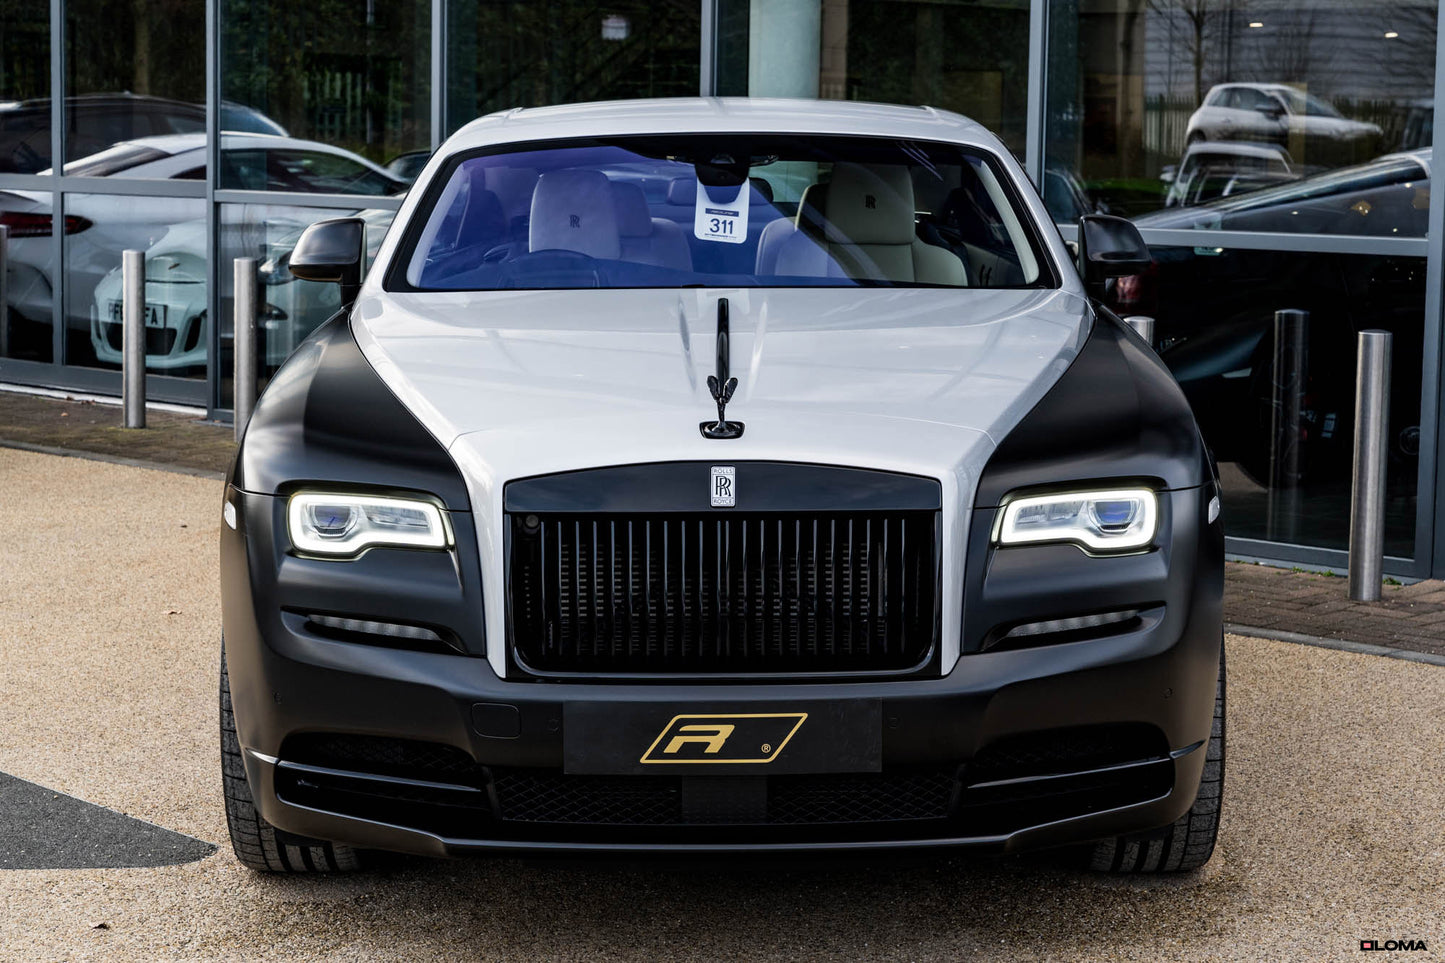 22" Custom Rims for Rolls-Royce Wraith LS-MCS | LOMA Forged™